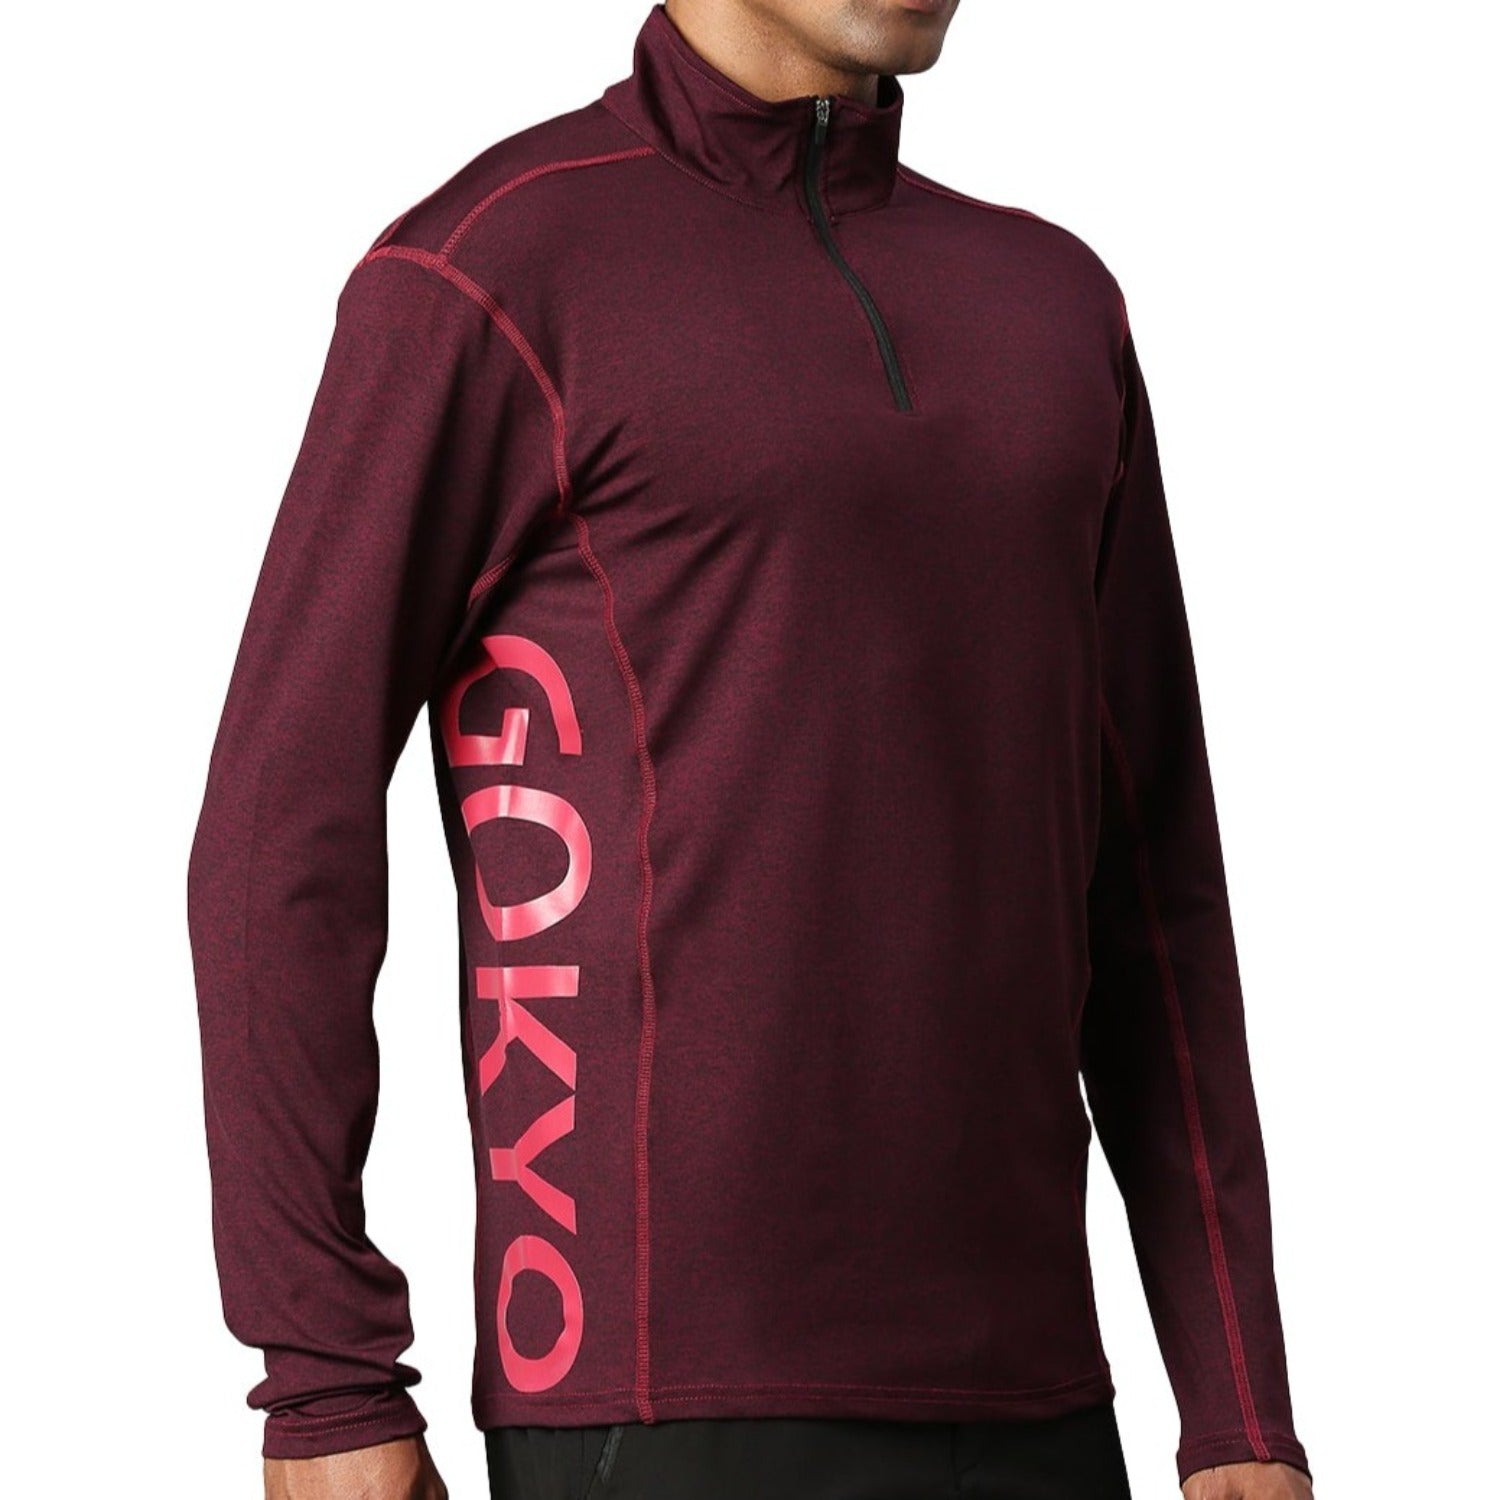 Buy Gokyo K2 Trekking & Outdoor Tshirt | Trekking & Hiking T-shirts at Gokyo Outdoor Clothing & Gear